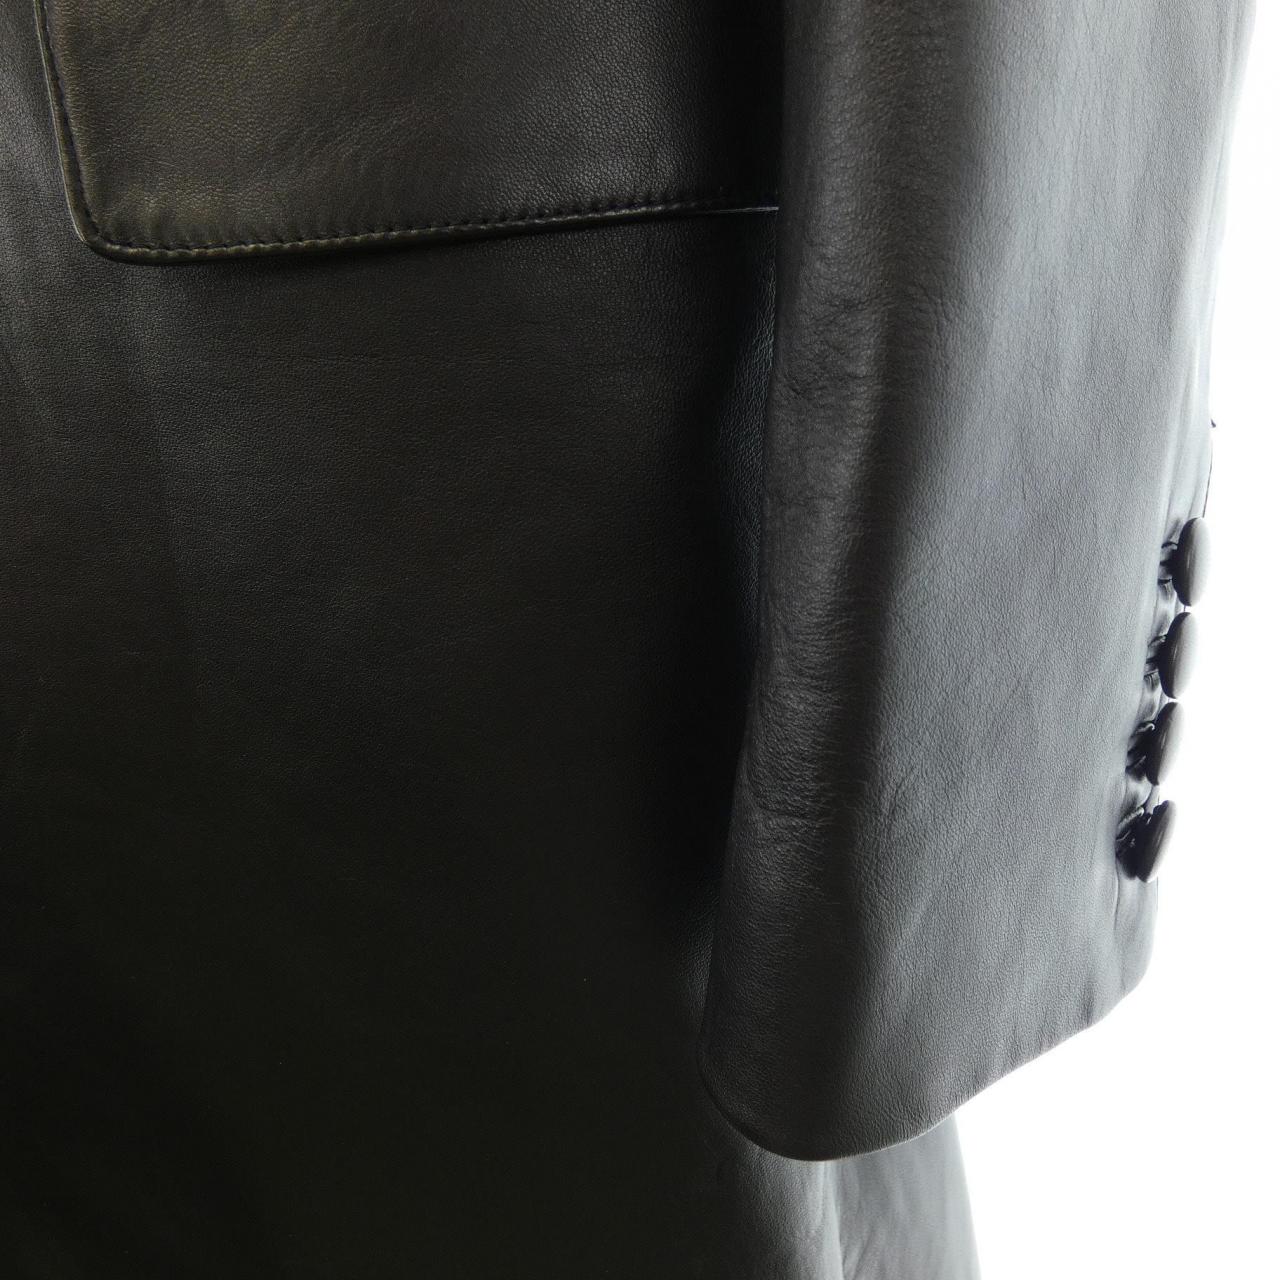 CELINE CELINE Leather Coat